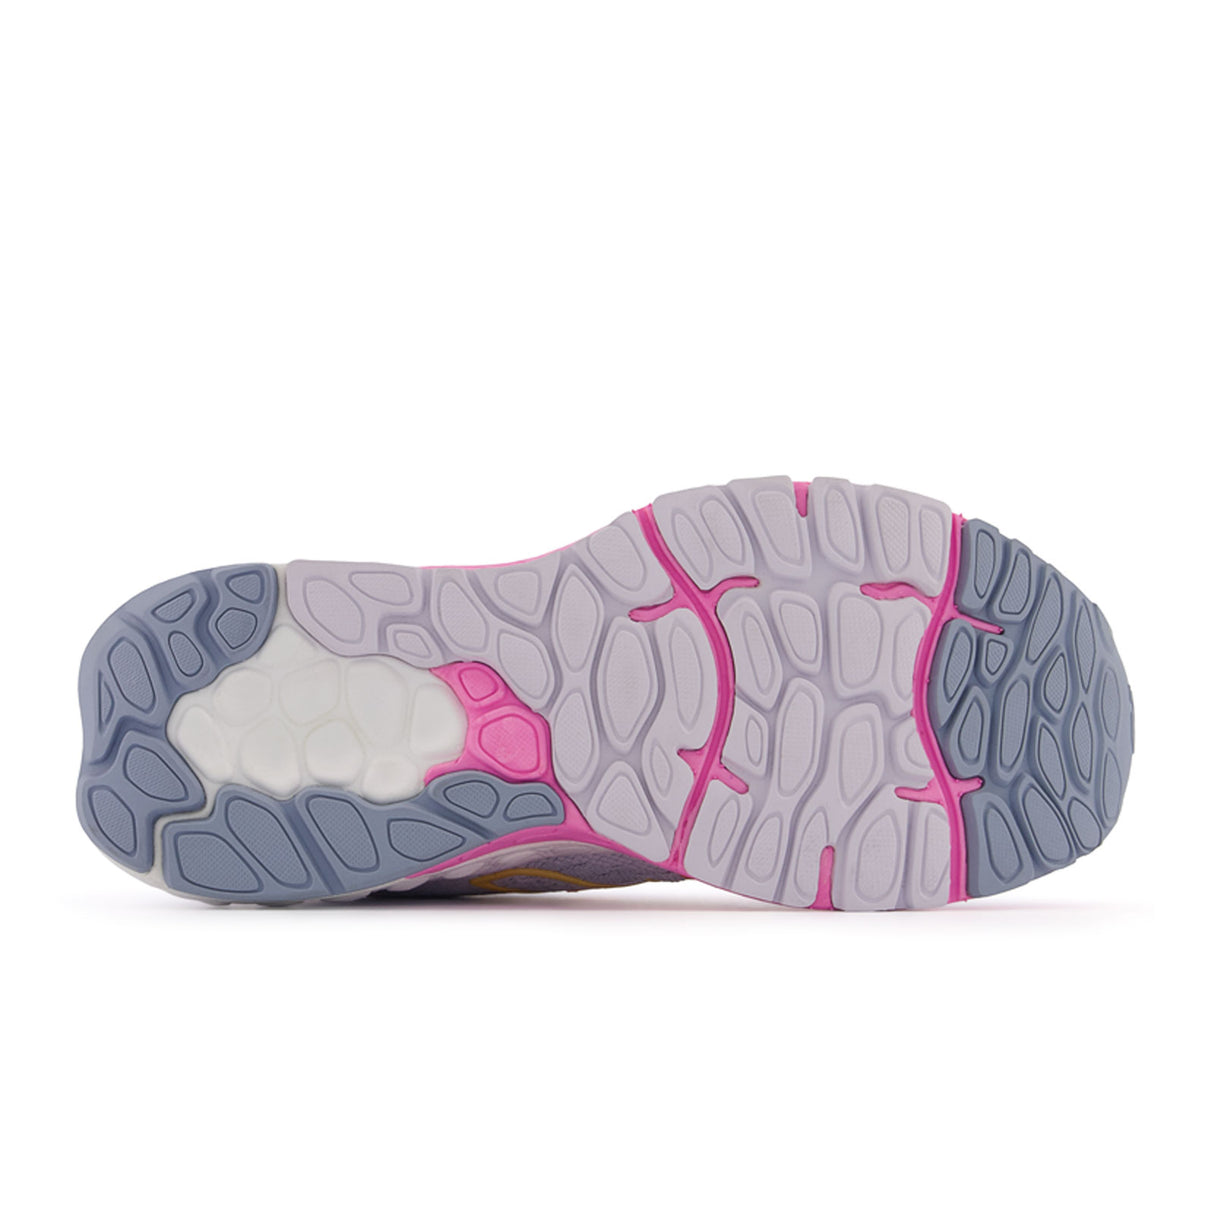 New Balance Fresh Foam X 880 v12 Running Shoe (Women) - Libra/Vibrant Pink/Vibrant Orange/Vibrant Apricot Athletic - Running - The Heel Shoe Fitters